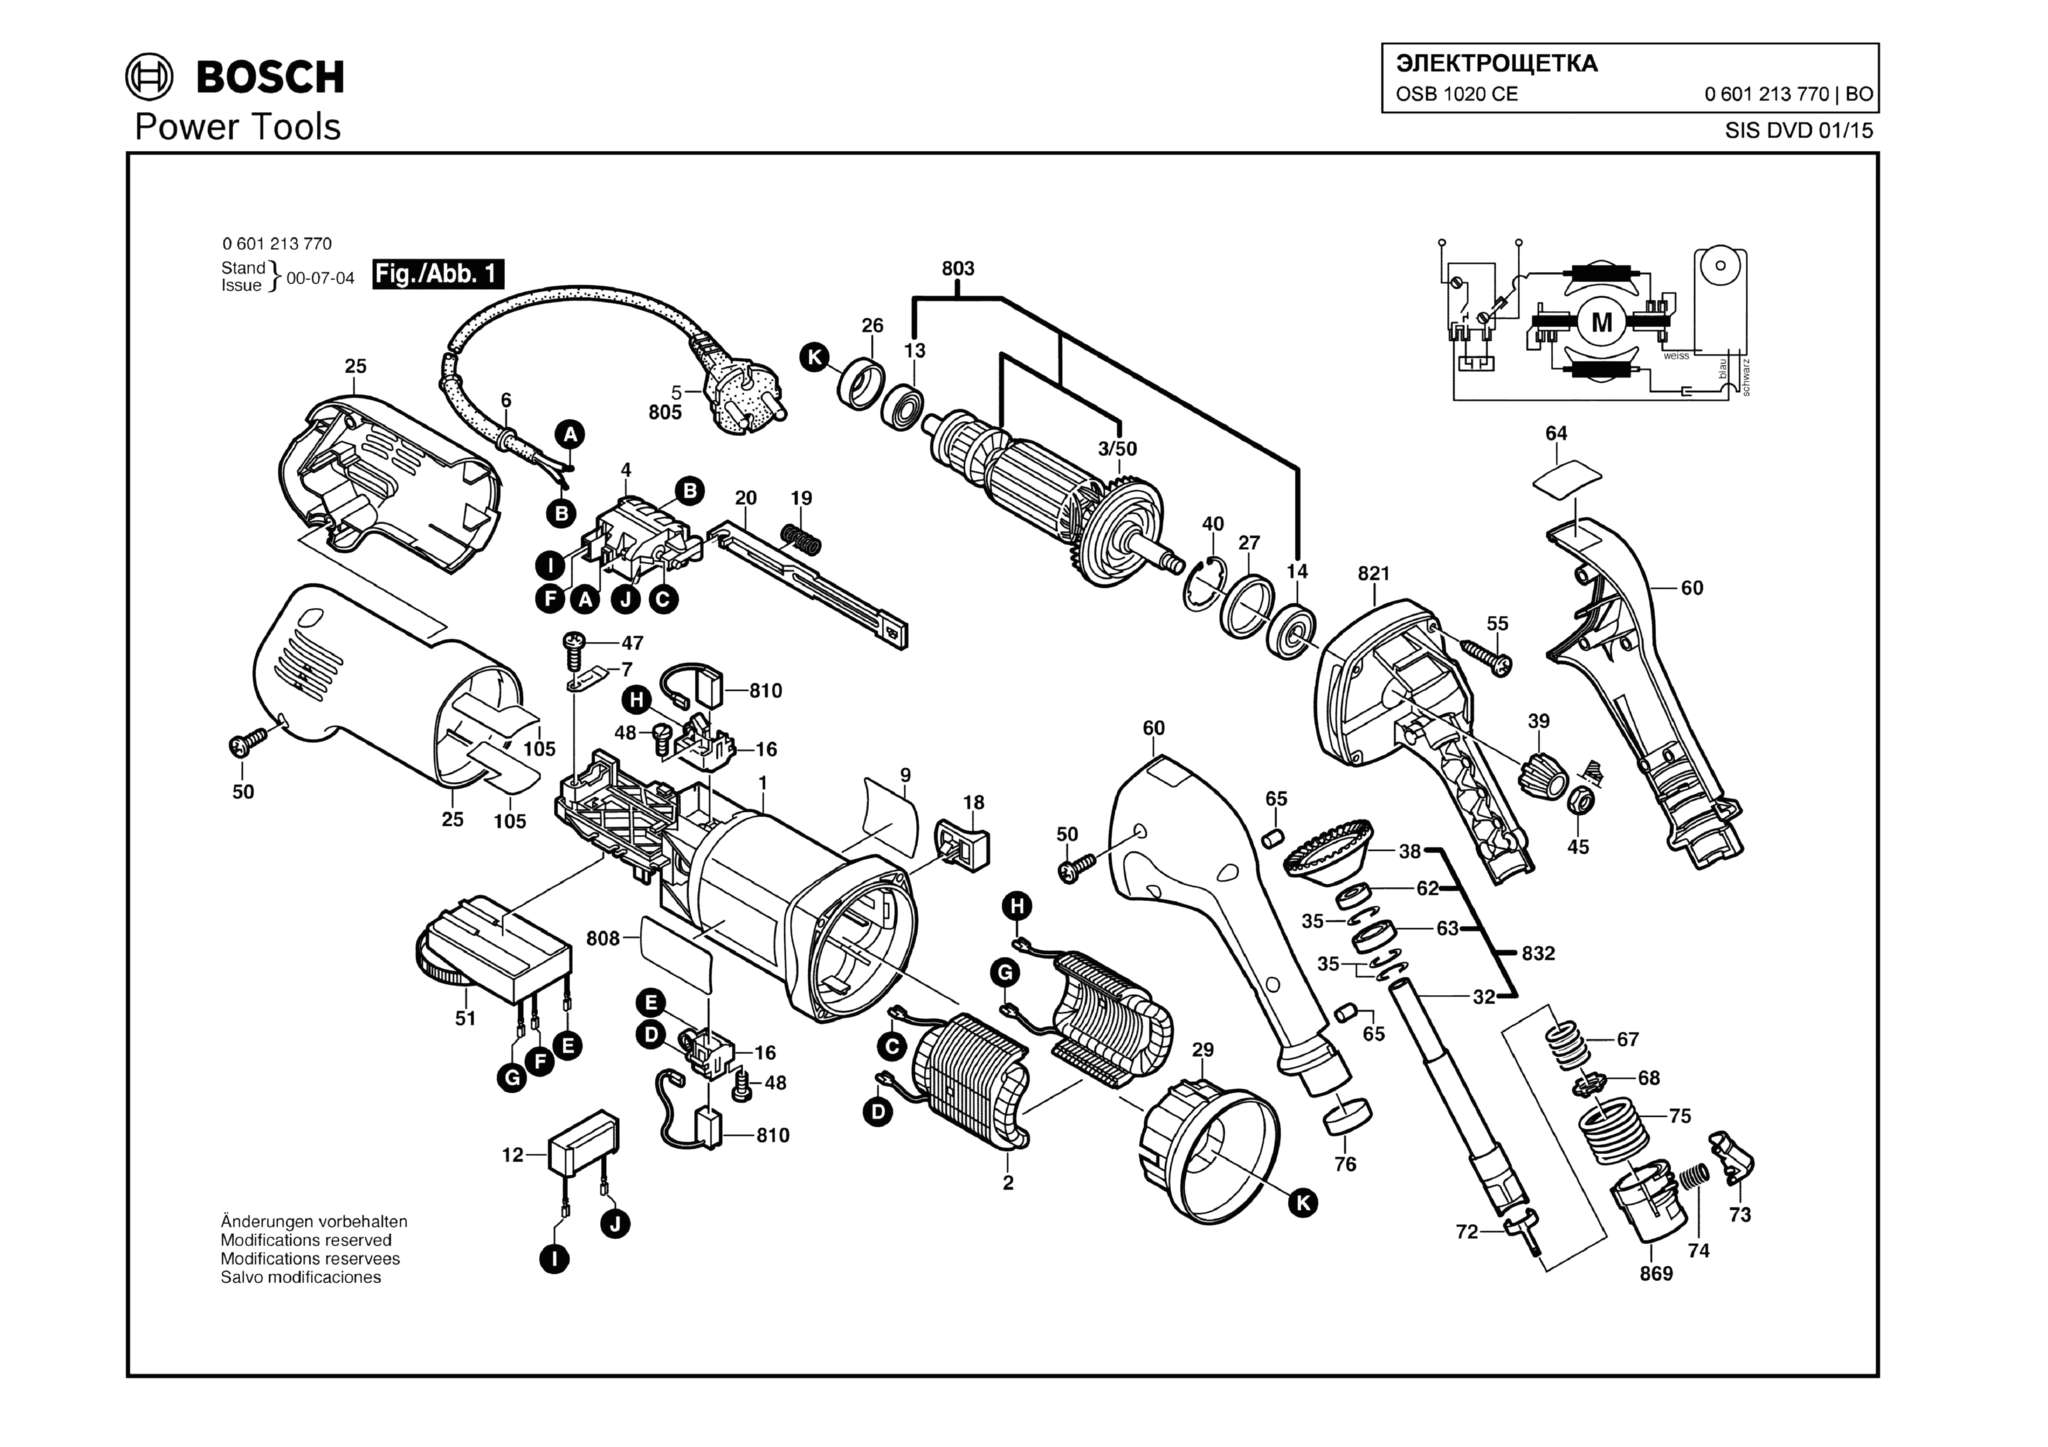 Запчасти, схема и деталировка Bosch OSB 1020 CE (ТИП 0601213770)